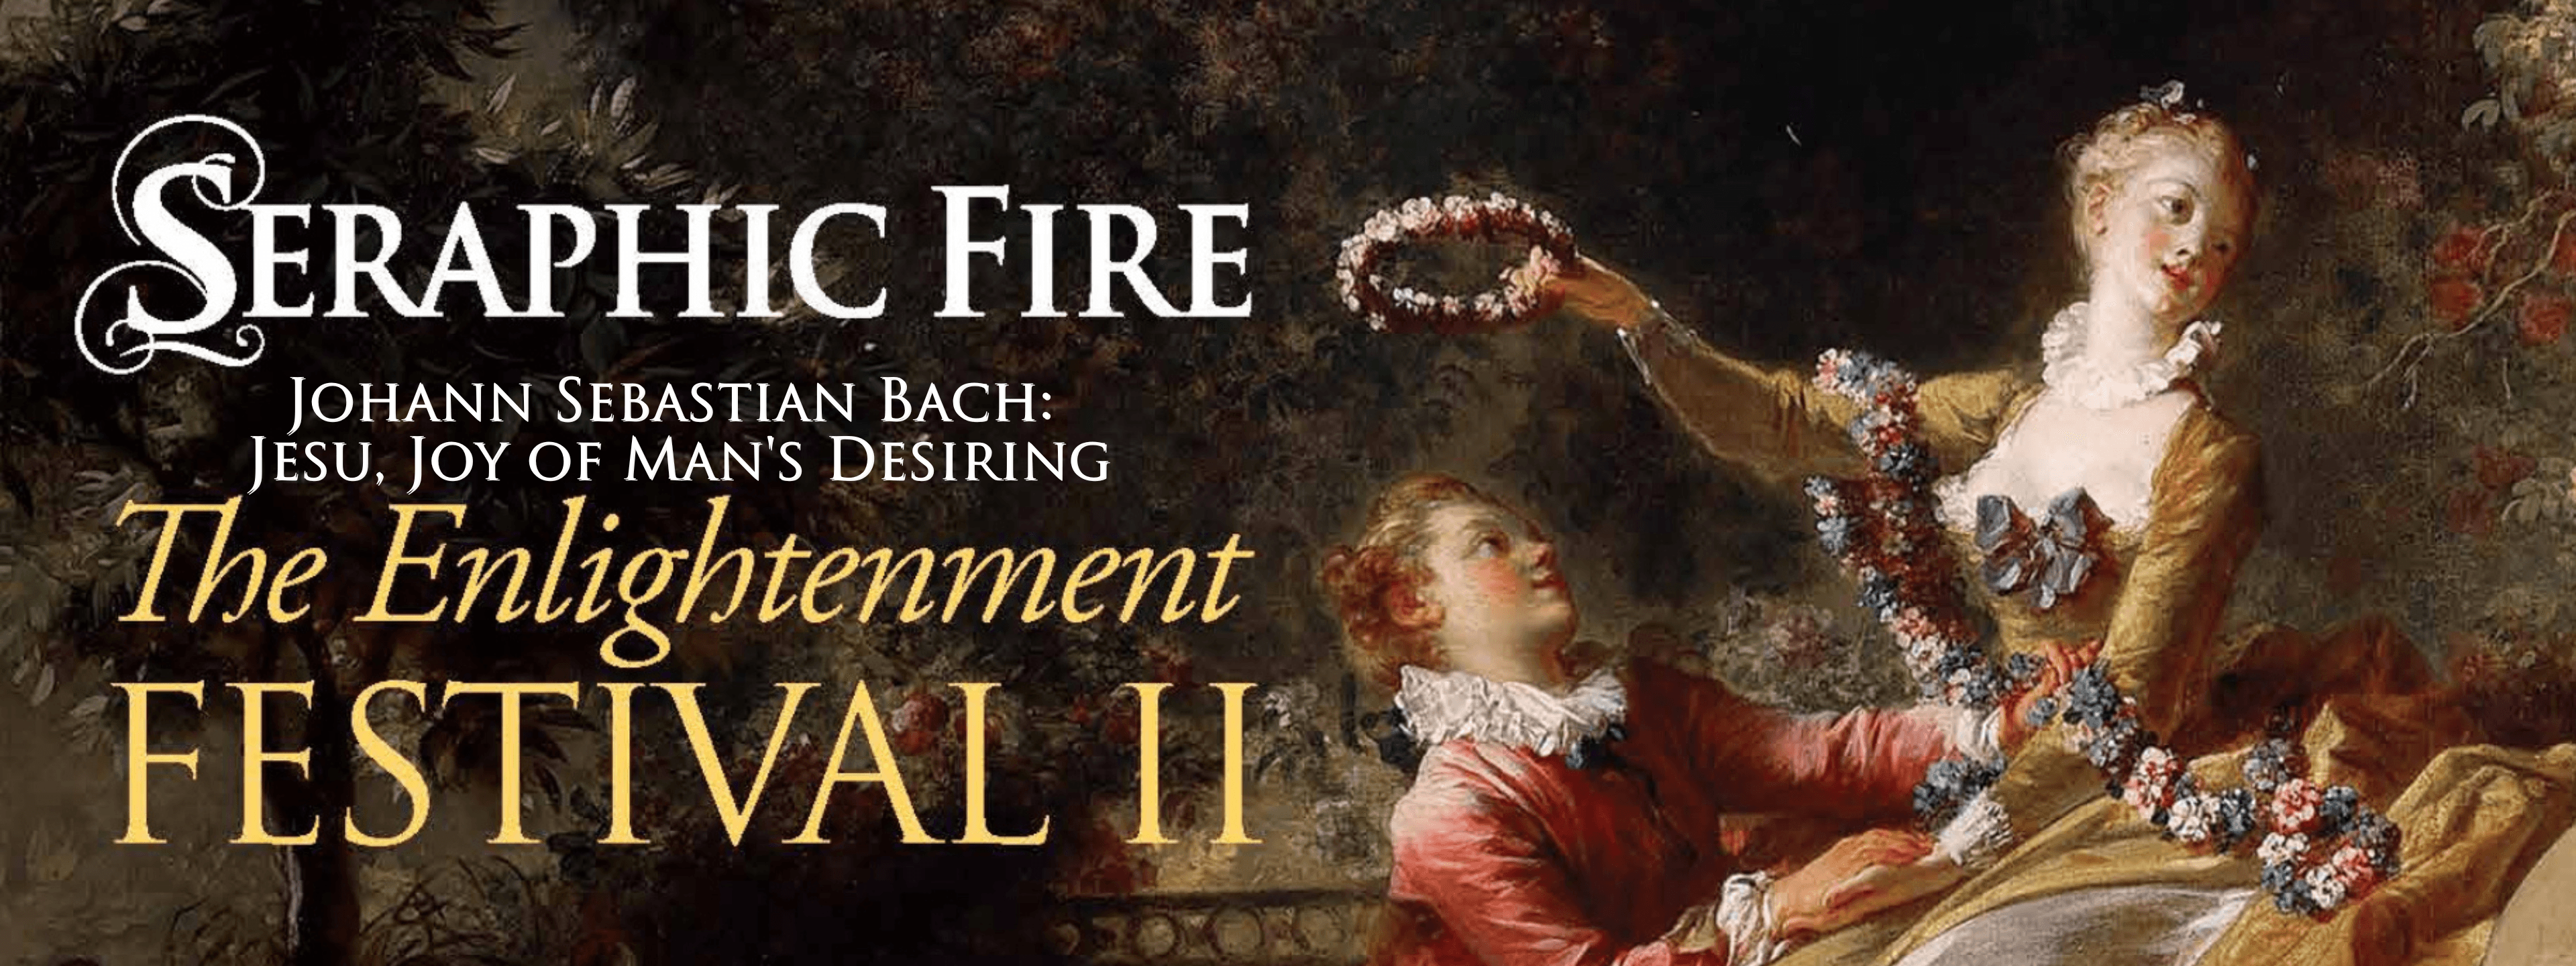 Just Added to the Seraphic Fire Digital Library- Johann Sebastian Bach: Jesu, Joy of Man's Desiring